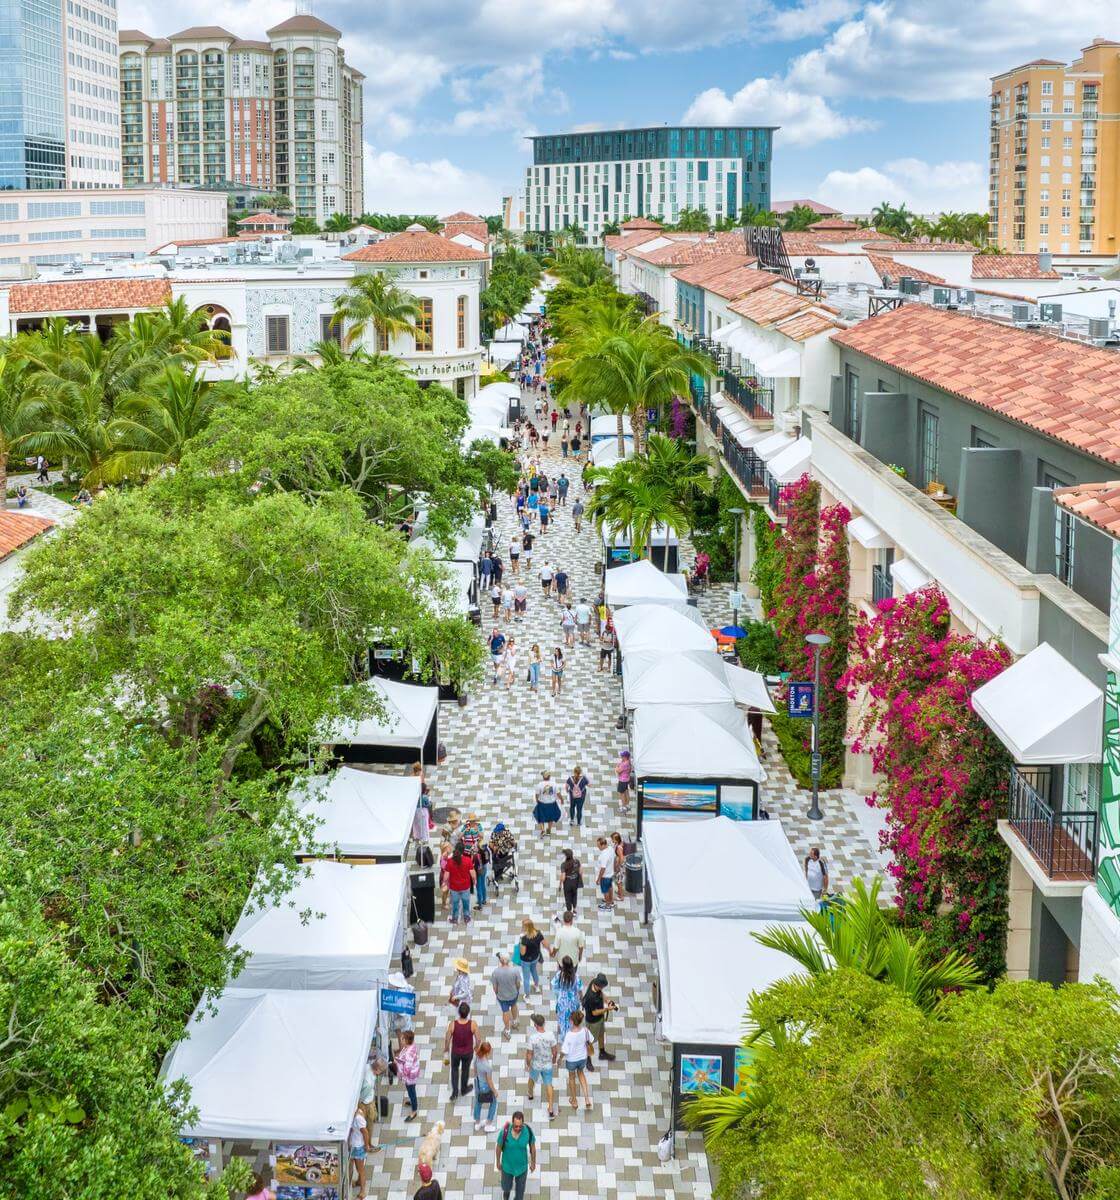 The 13th Annual Downtown West Palm Beach Art Festival